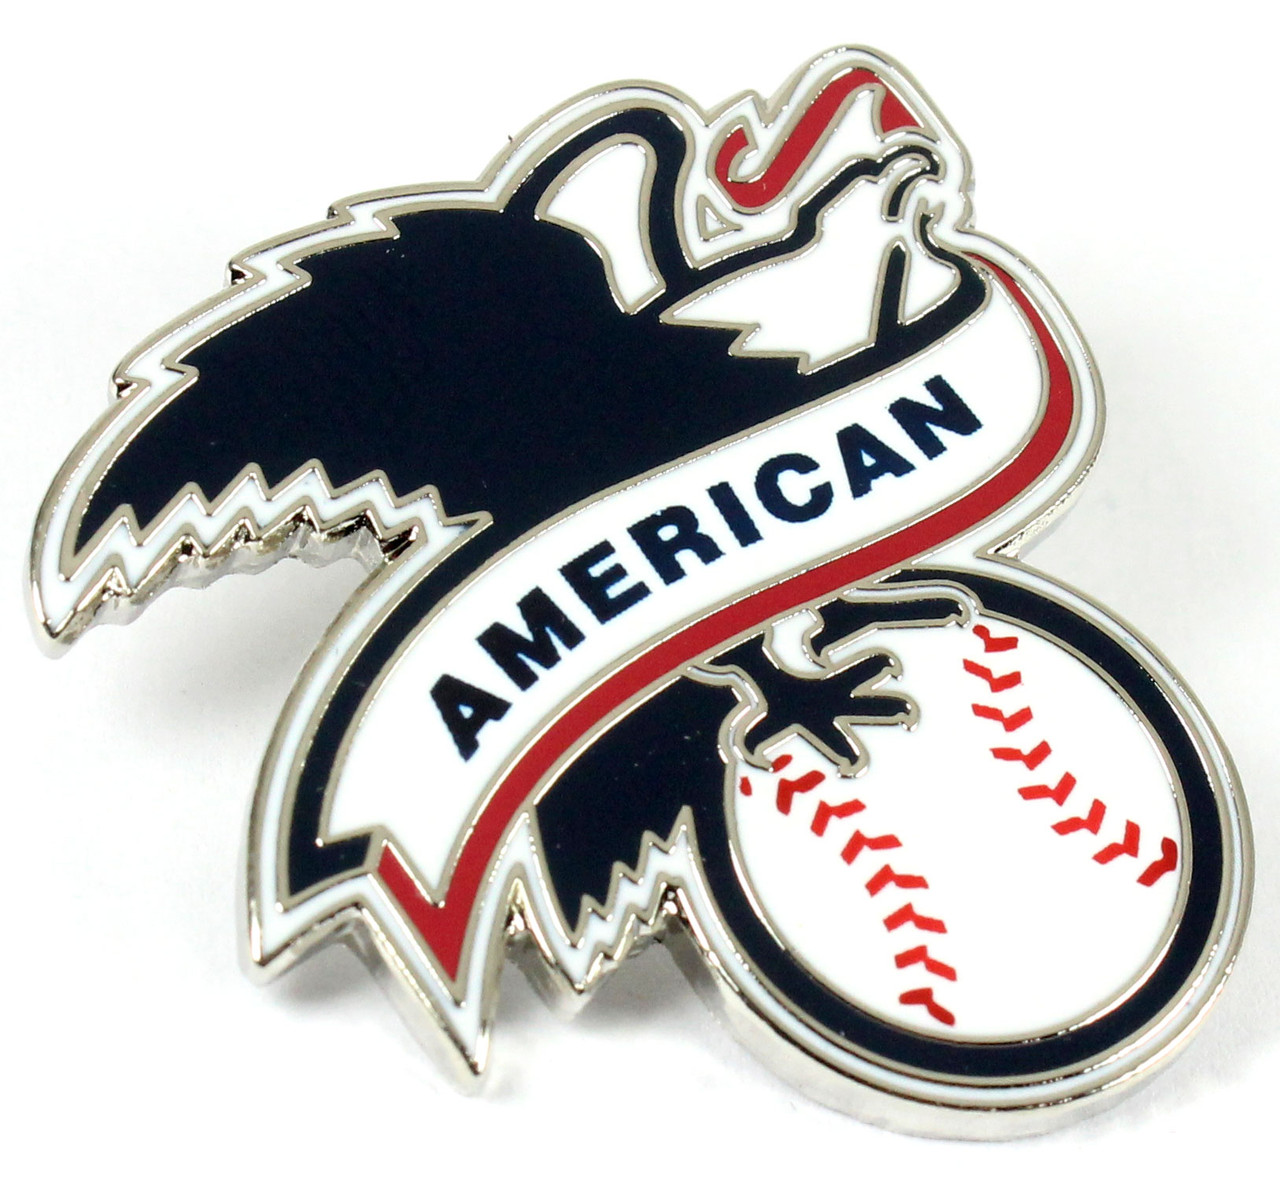 Atlanta Retro Big League Baseball - Navy Sticker for Sale by